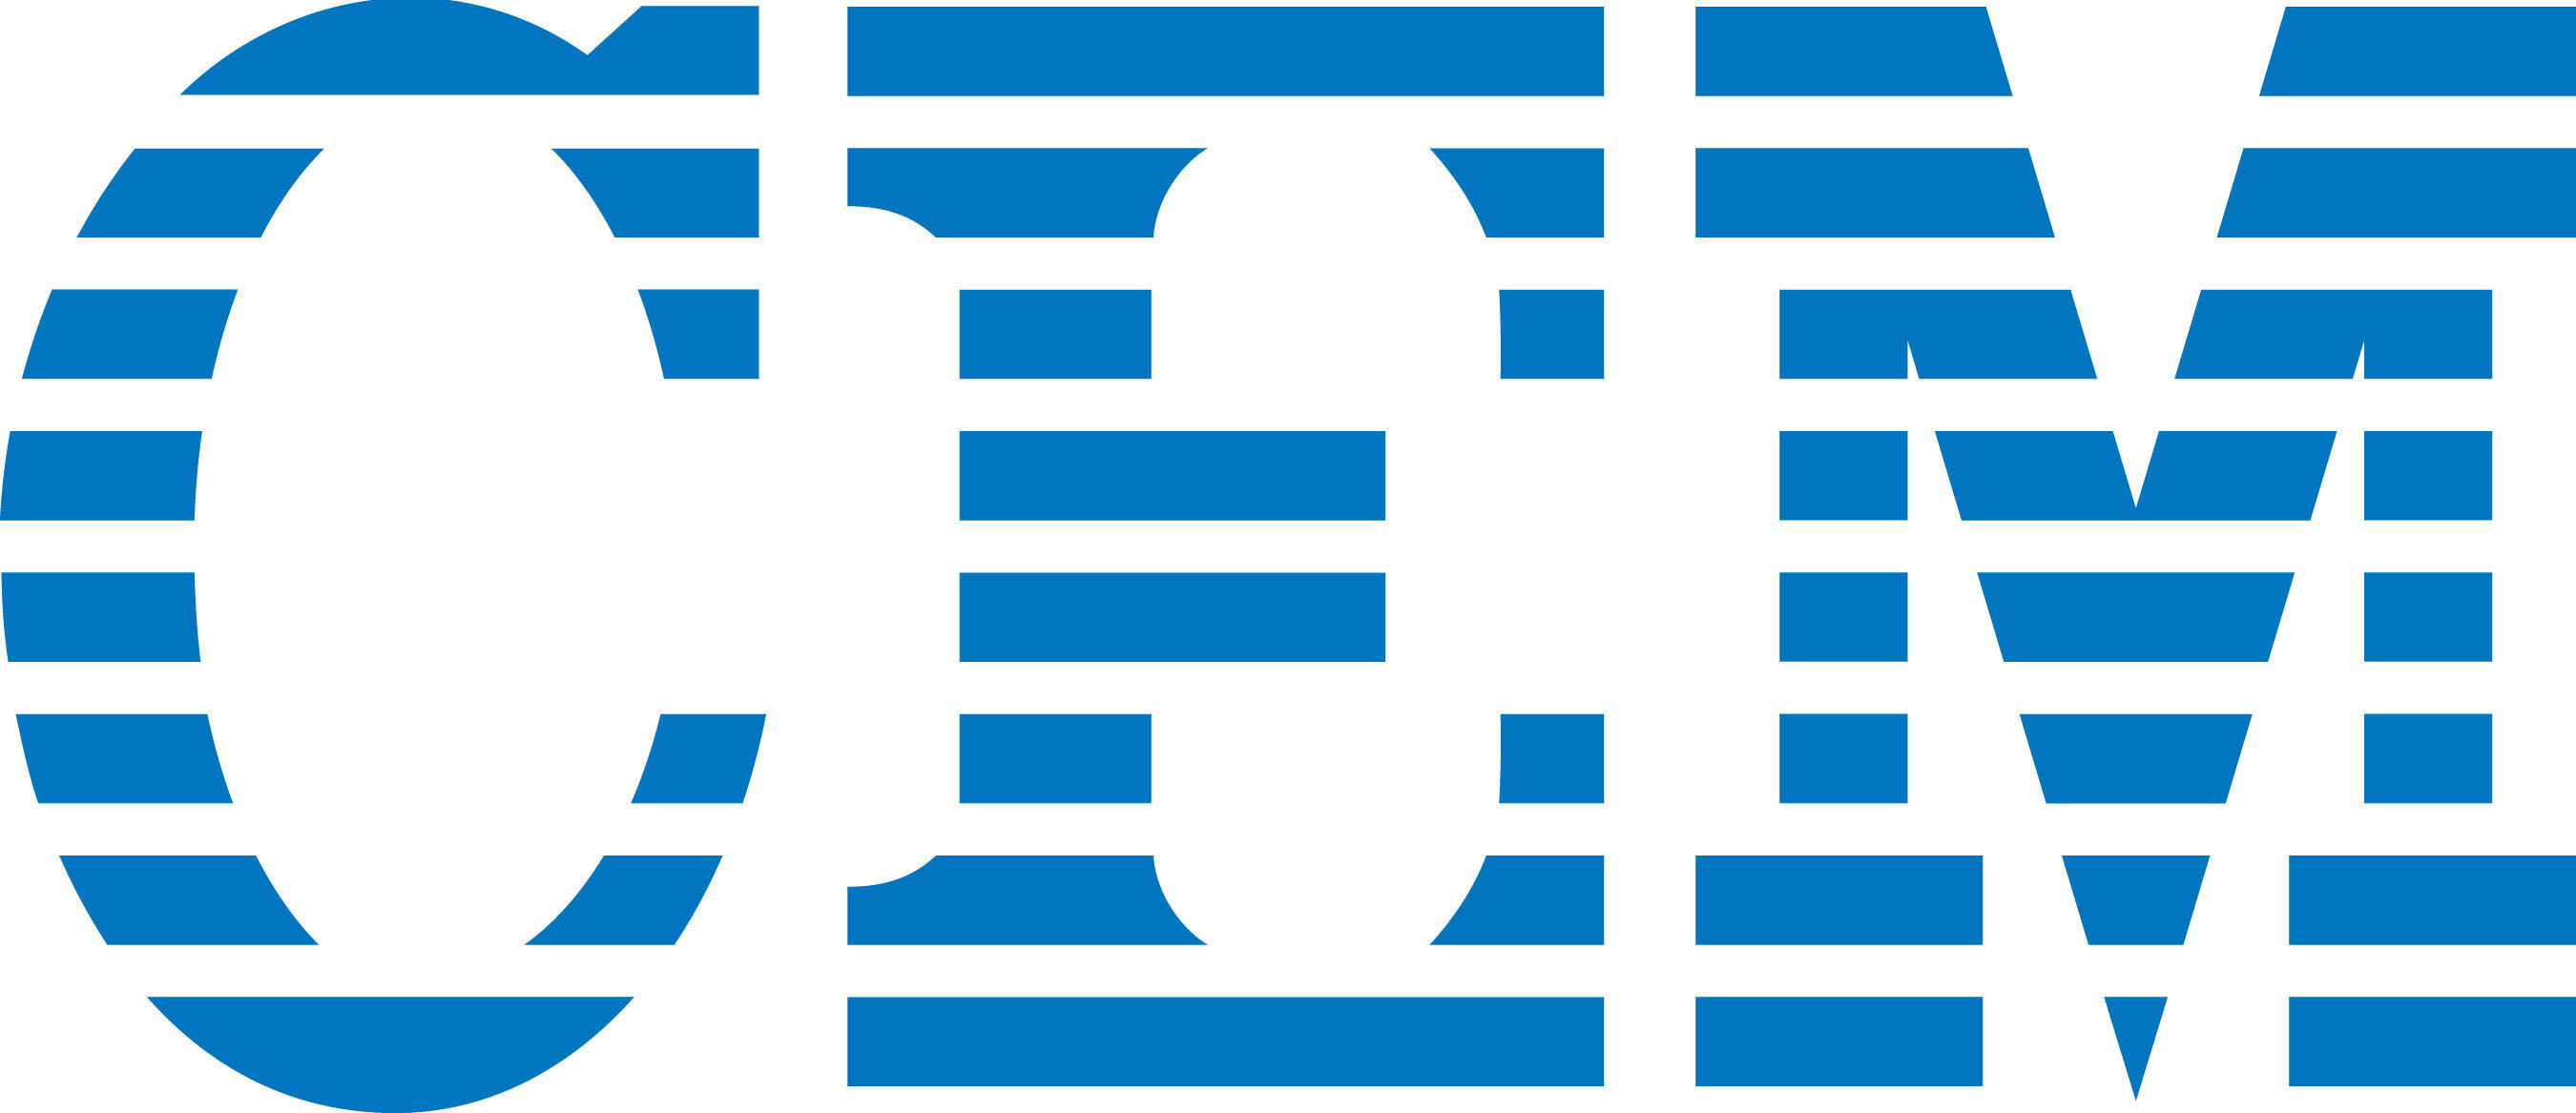 CEM Corporation logo. (PRNewsFoto/CEM Corporation) (PRNewsFoto/)